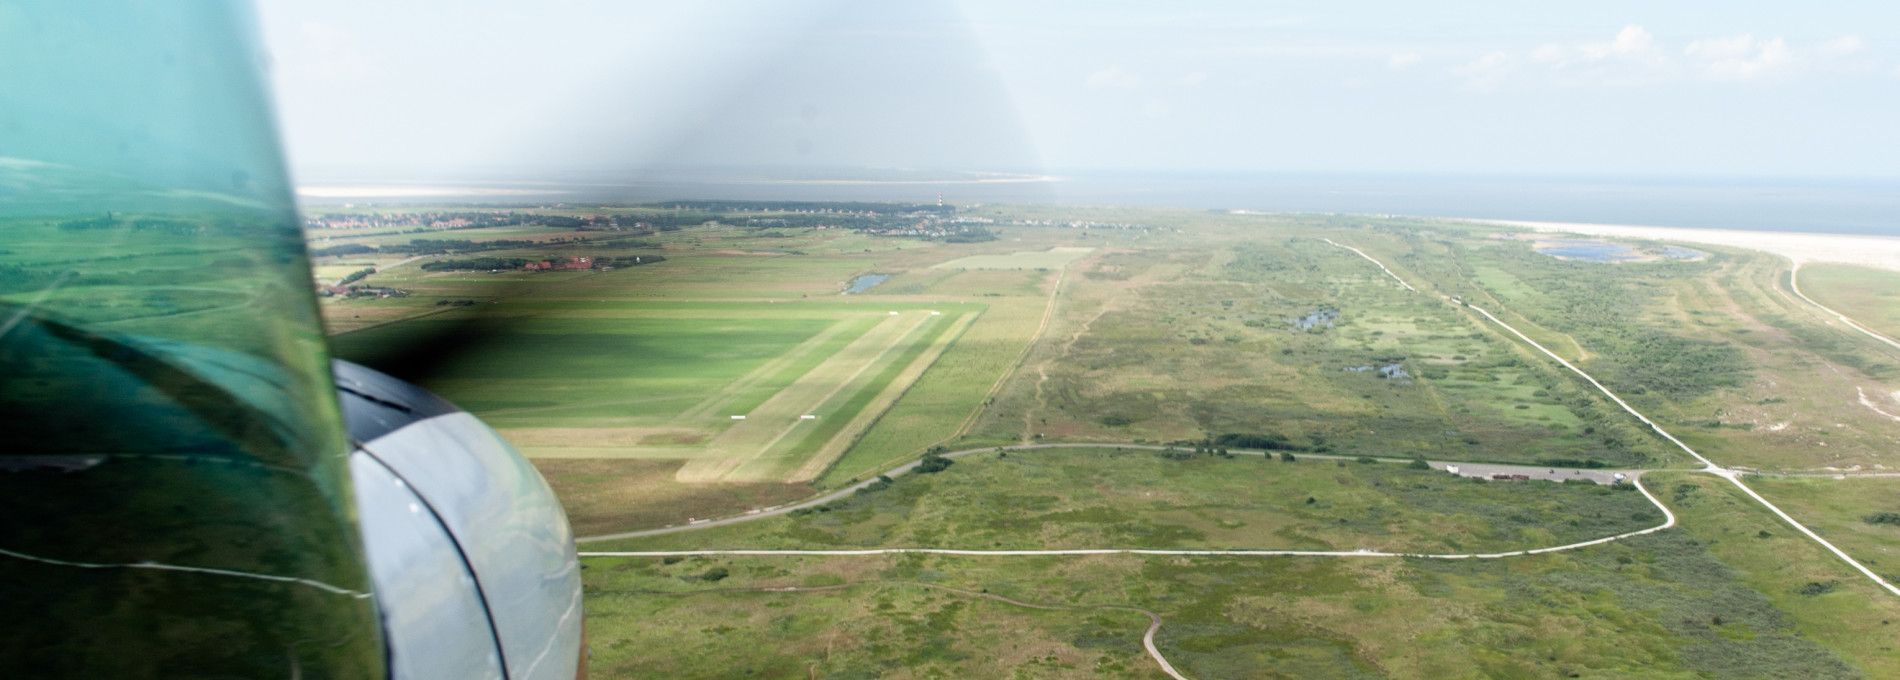 Ameland Airport - VVV Ameland